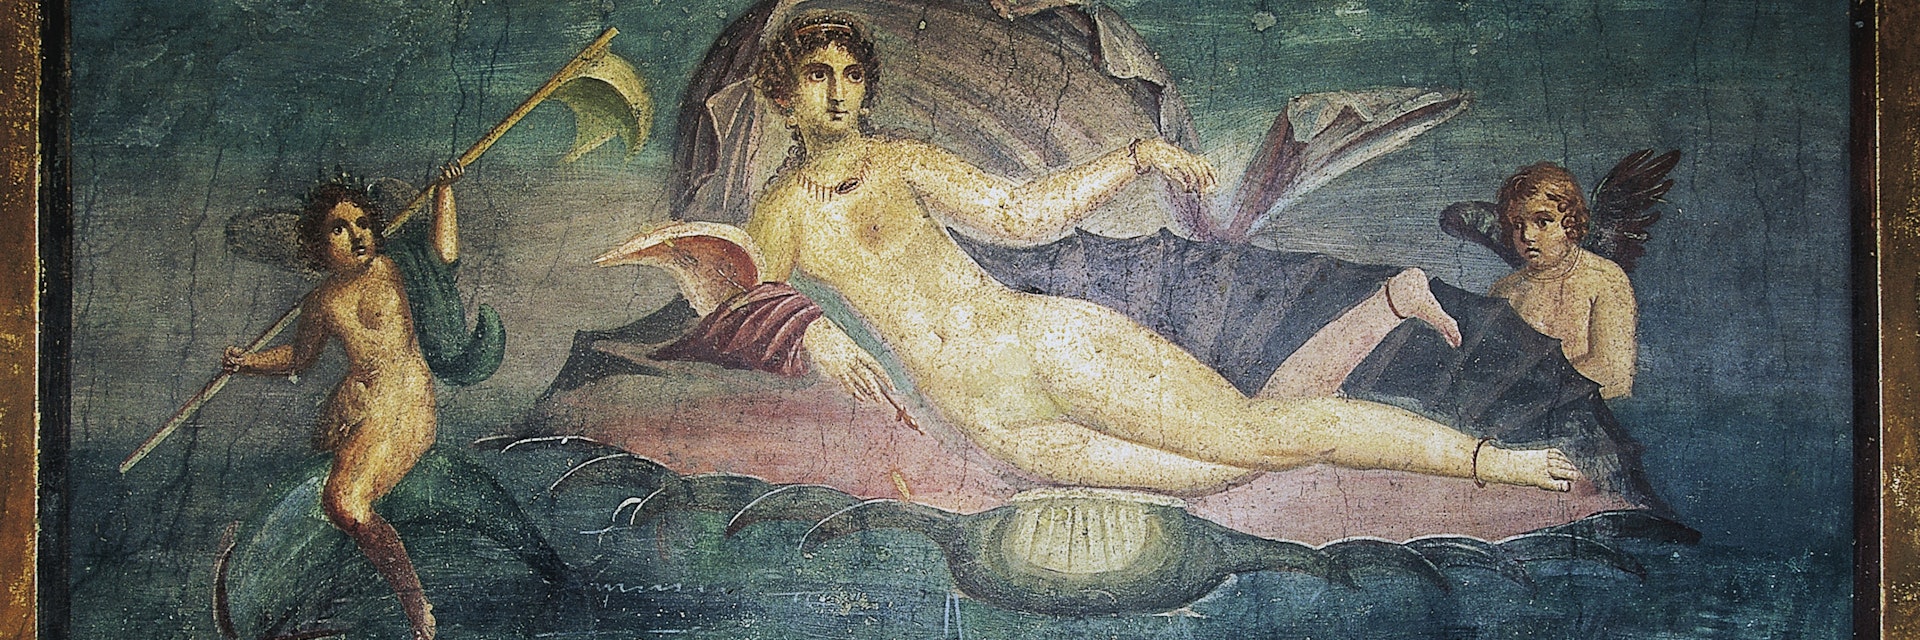 Fresco depicting Venus, House of Venus in Shell, Pompeii (Unesco World Heritage List, 1997), Campania, Italy, Roman civilization, 1st century BC